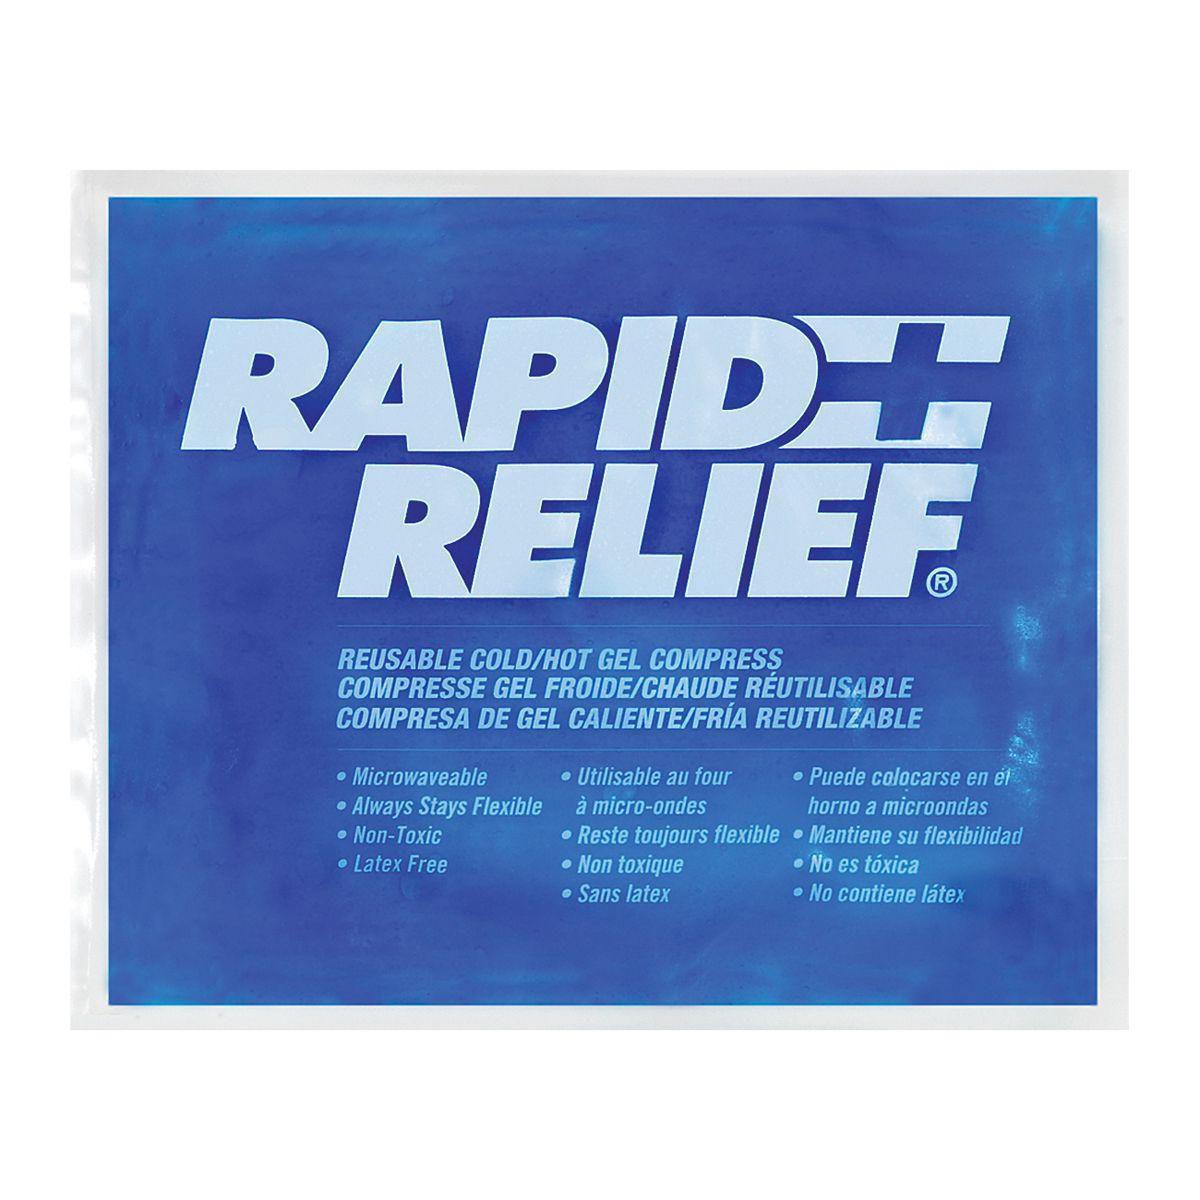 Rapid Relief Cold/Hot Gel Compress (9" x 11")